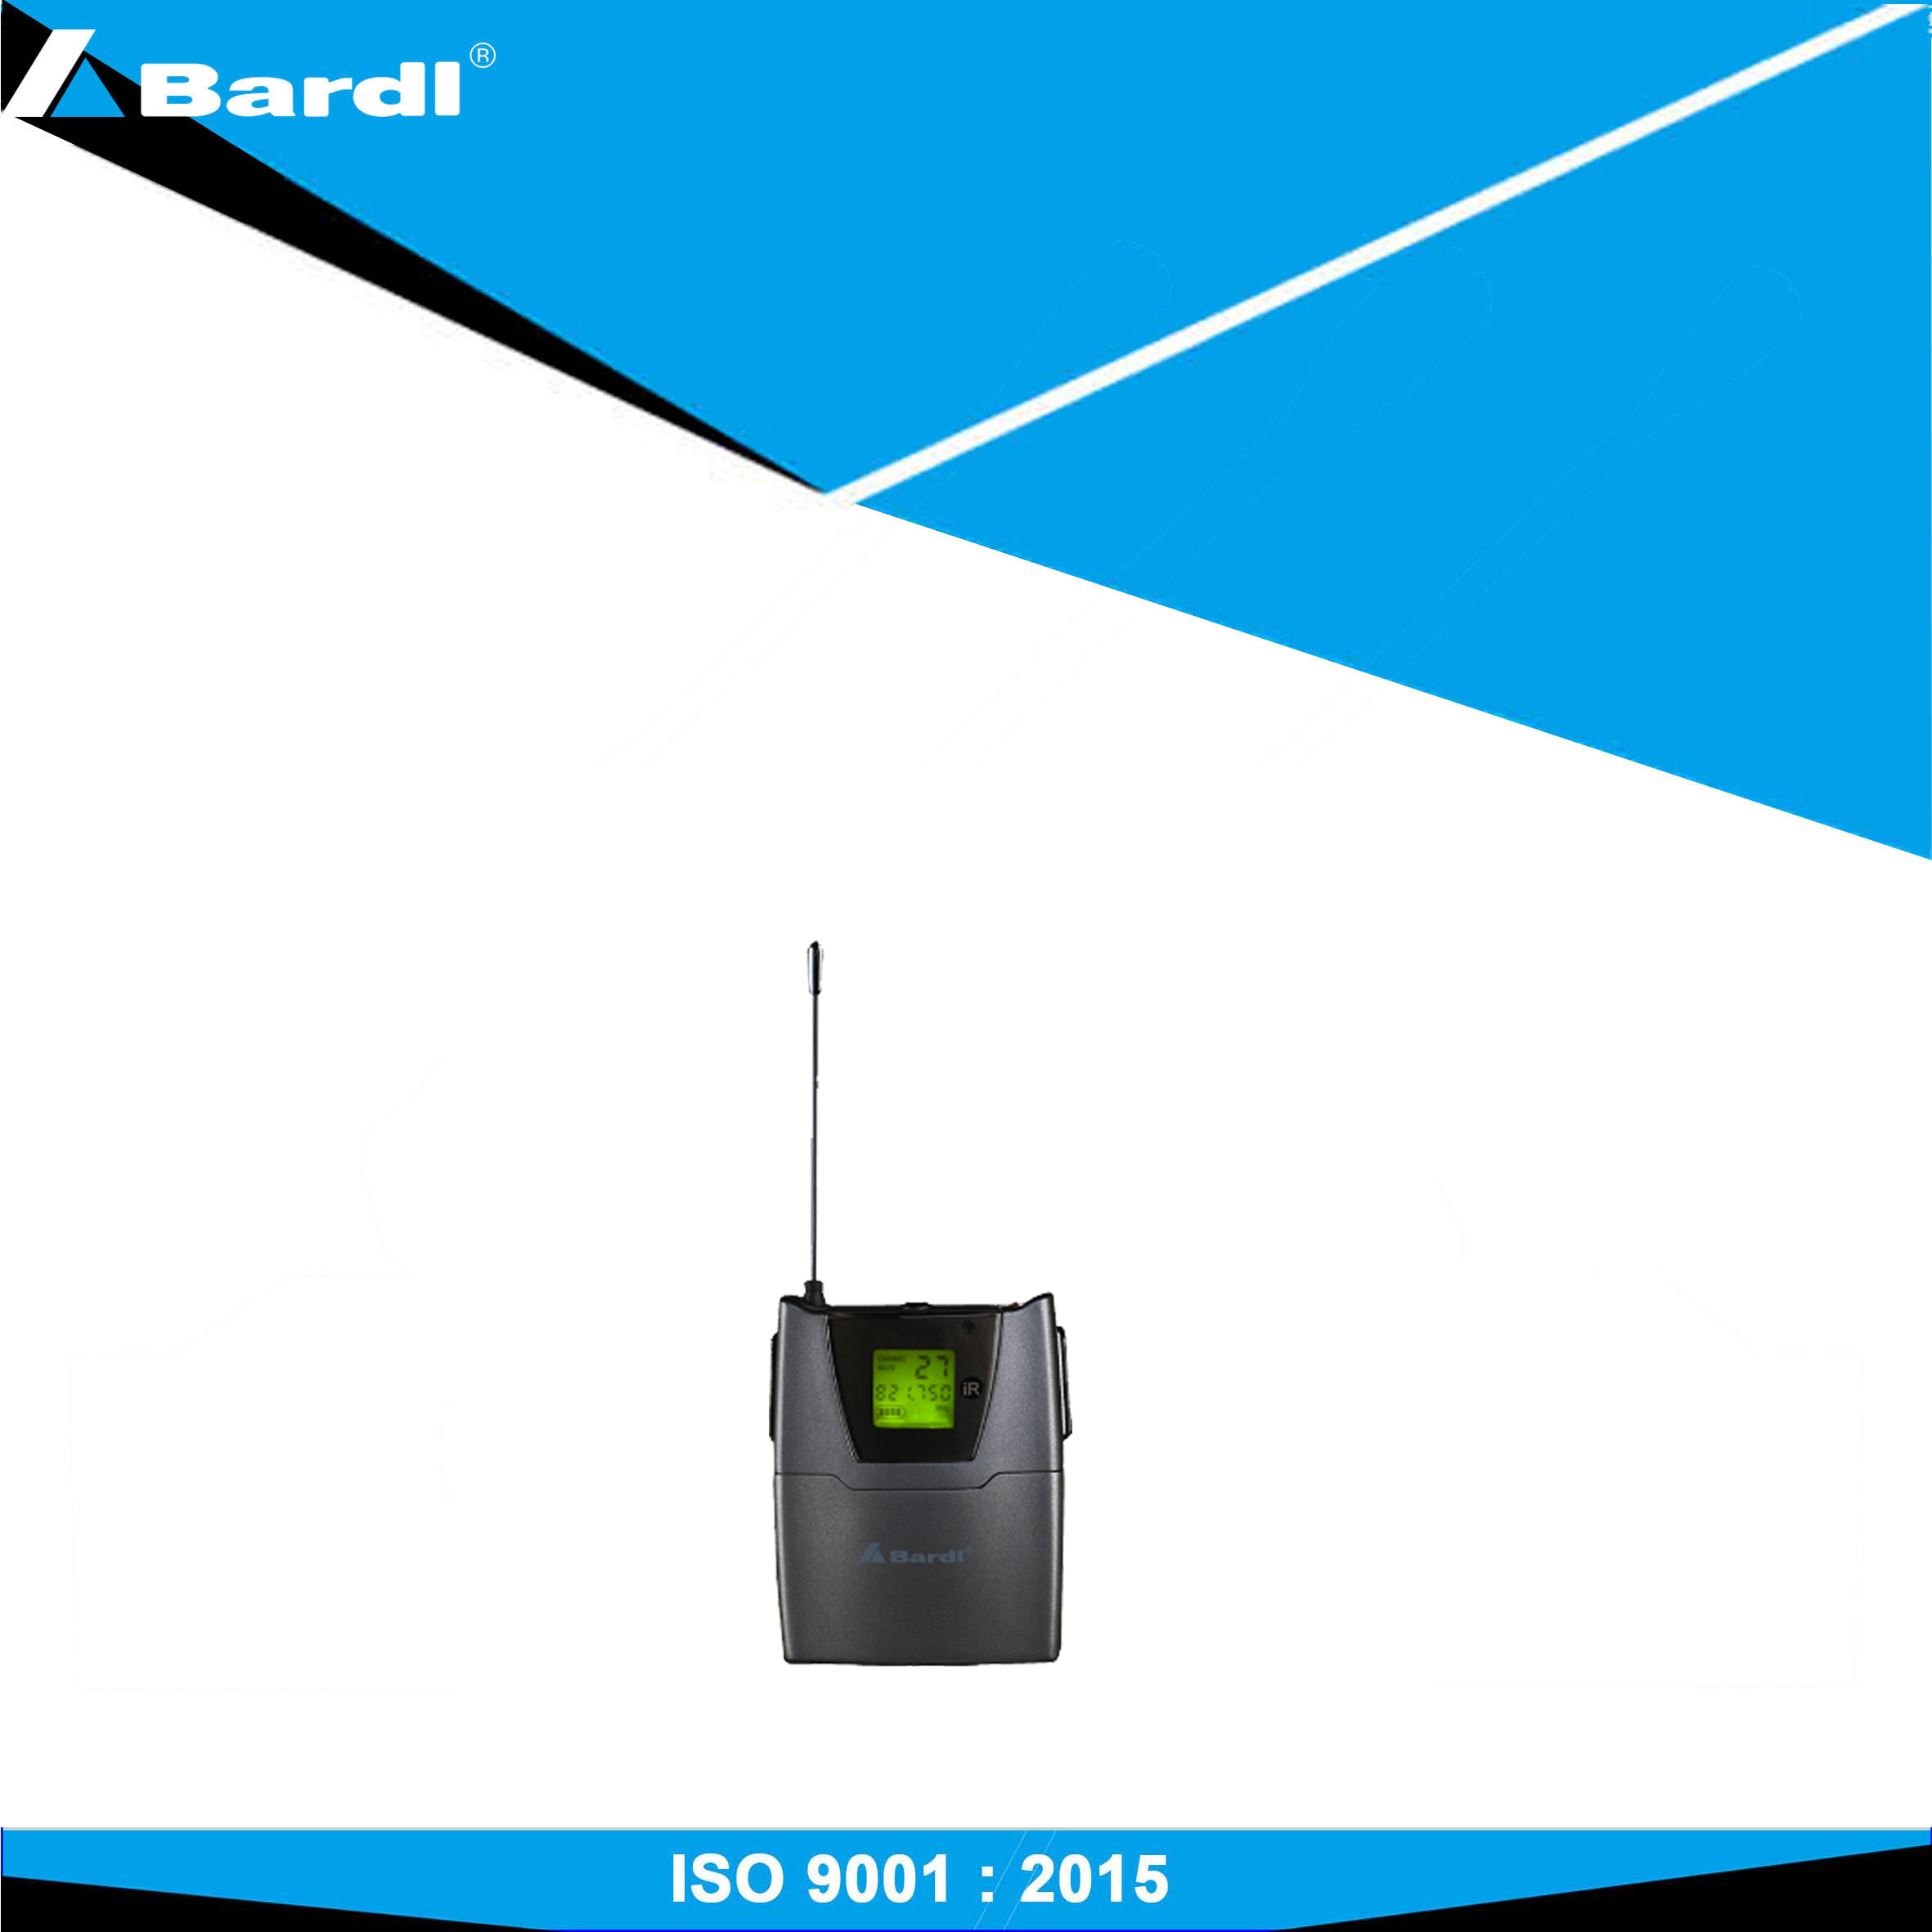 Bardl MK-8000 Wireless microphone